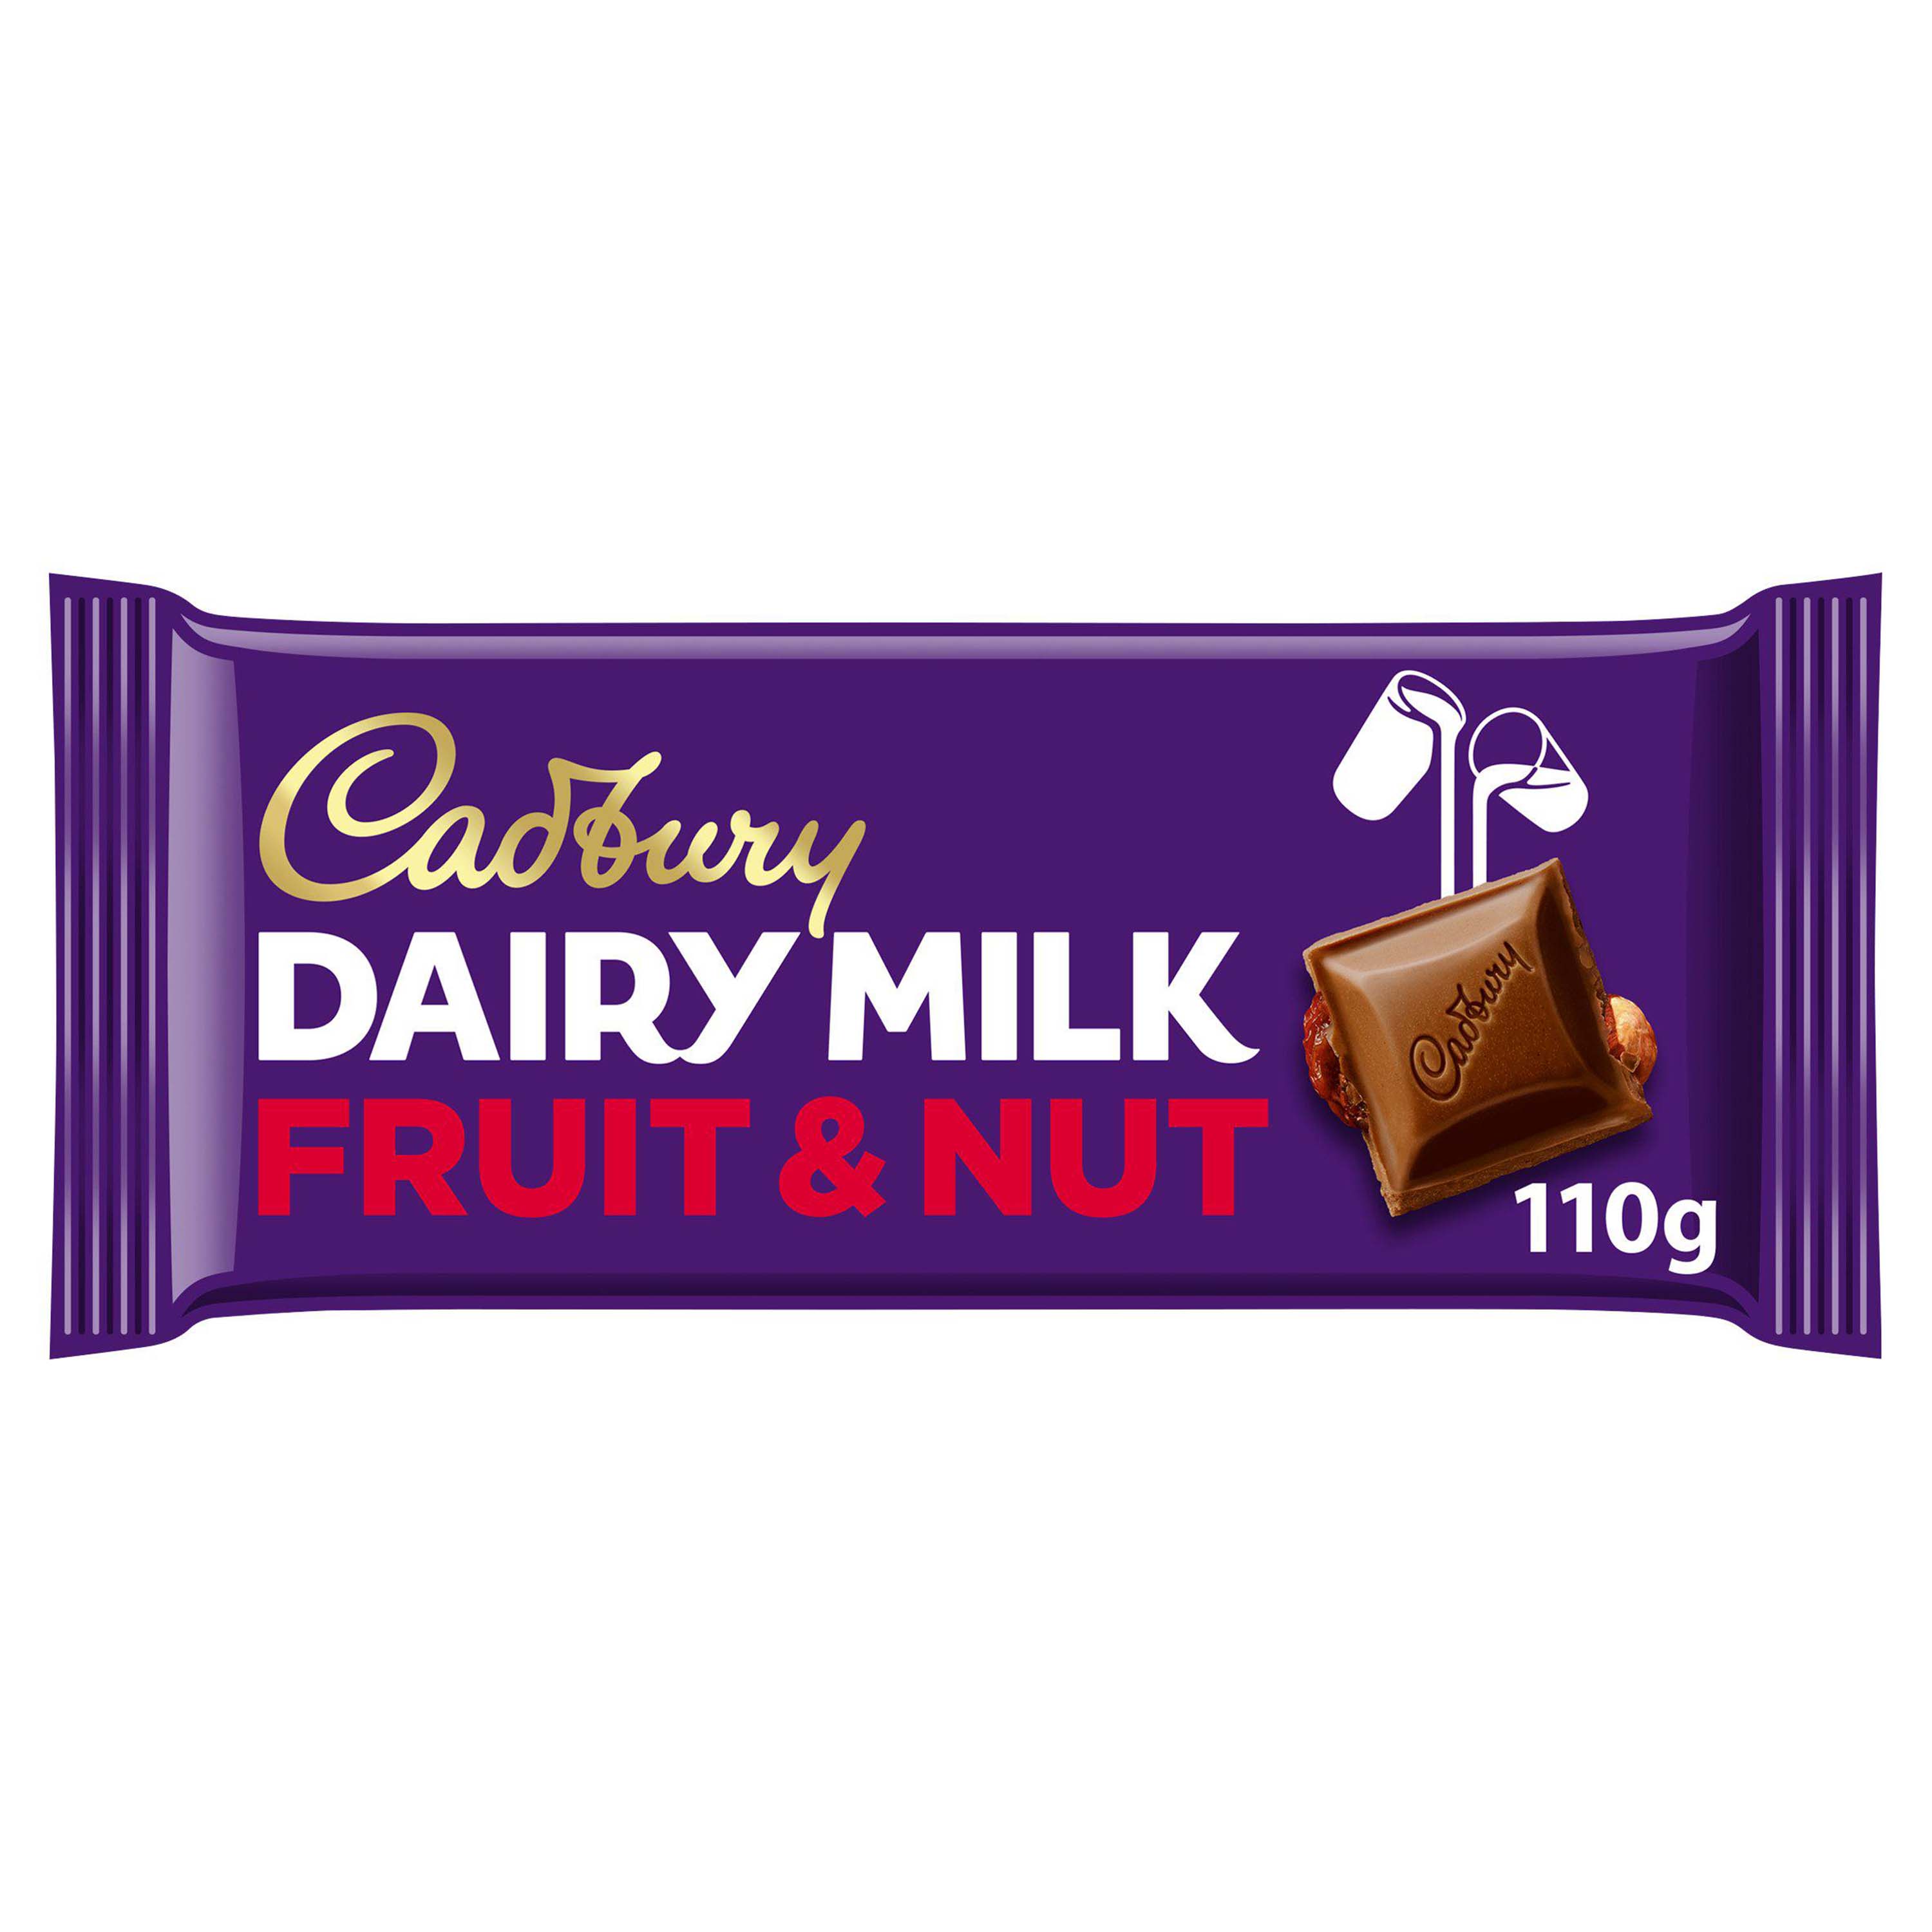 Cadbury Dairy Milk Chocolate Bar (110g)